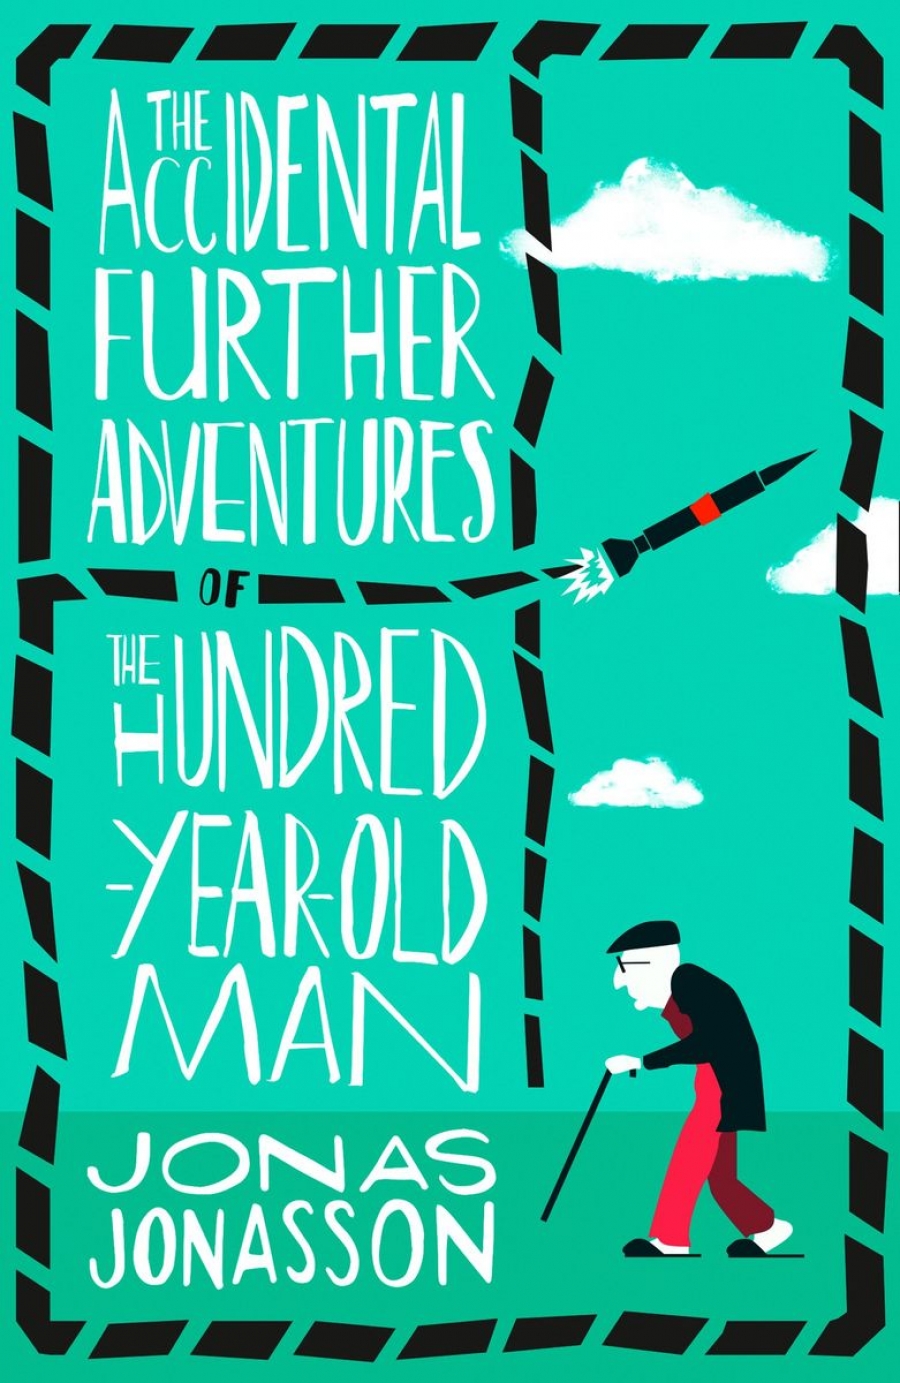 Jonas, Jonasson Accidental further adventures of the hundred-year-old man 